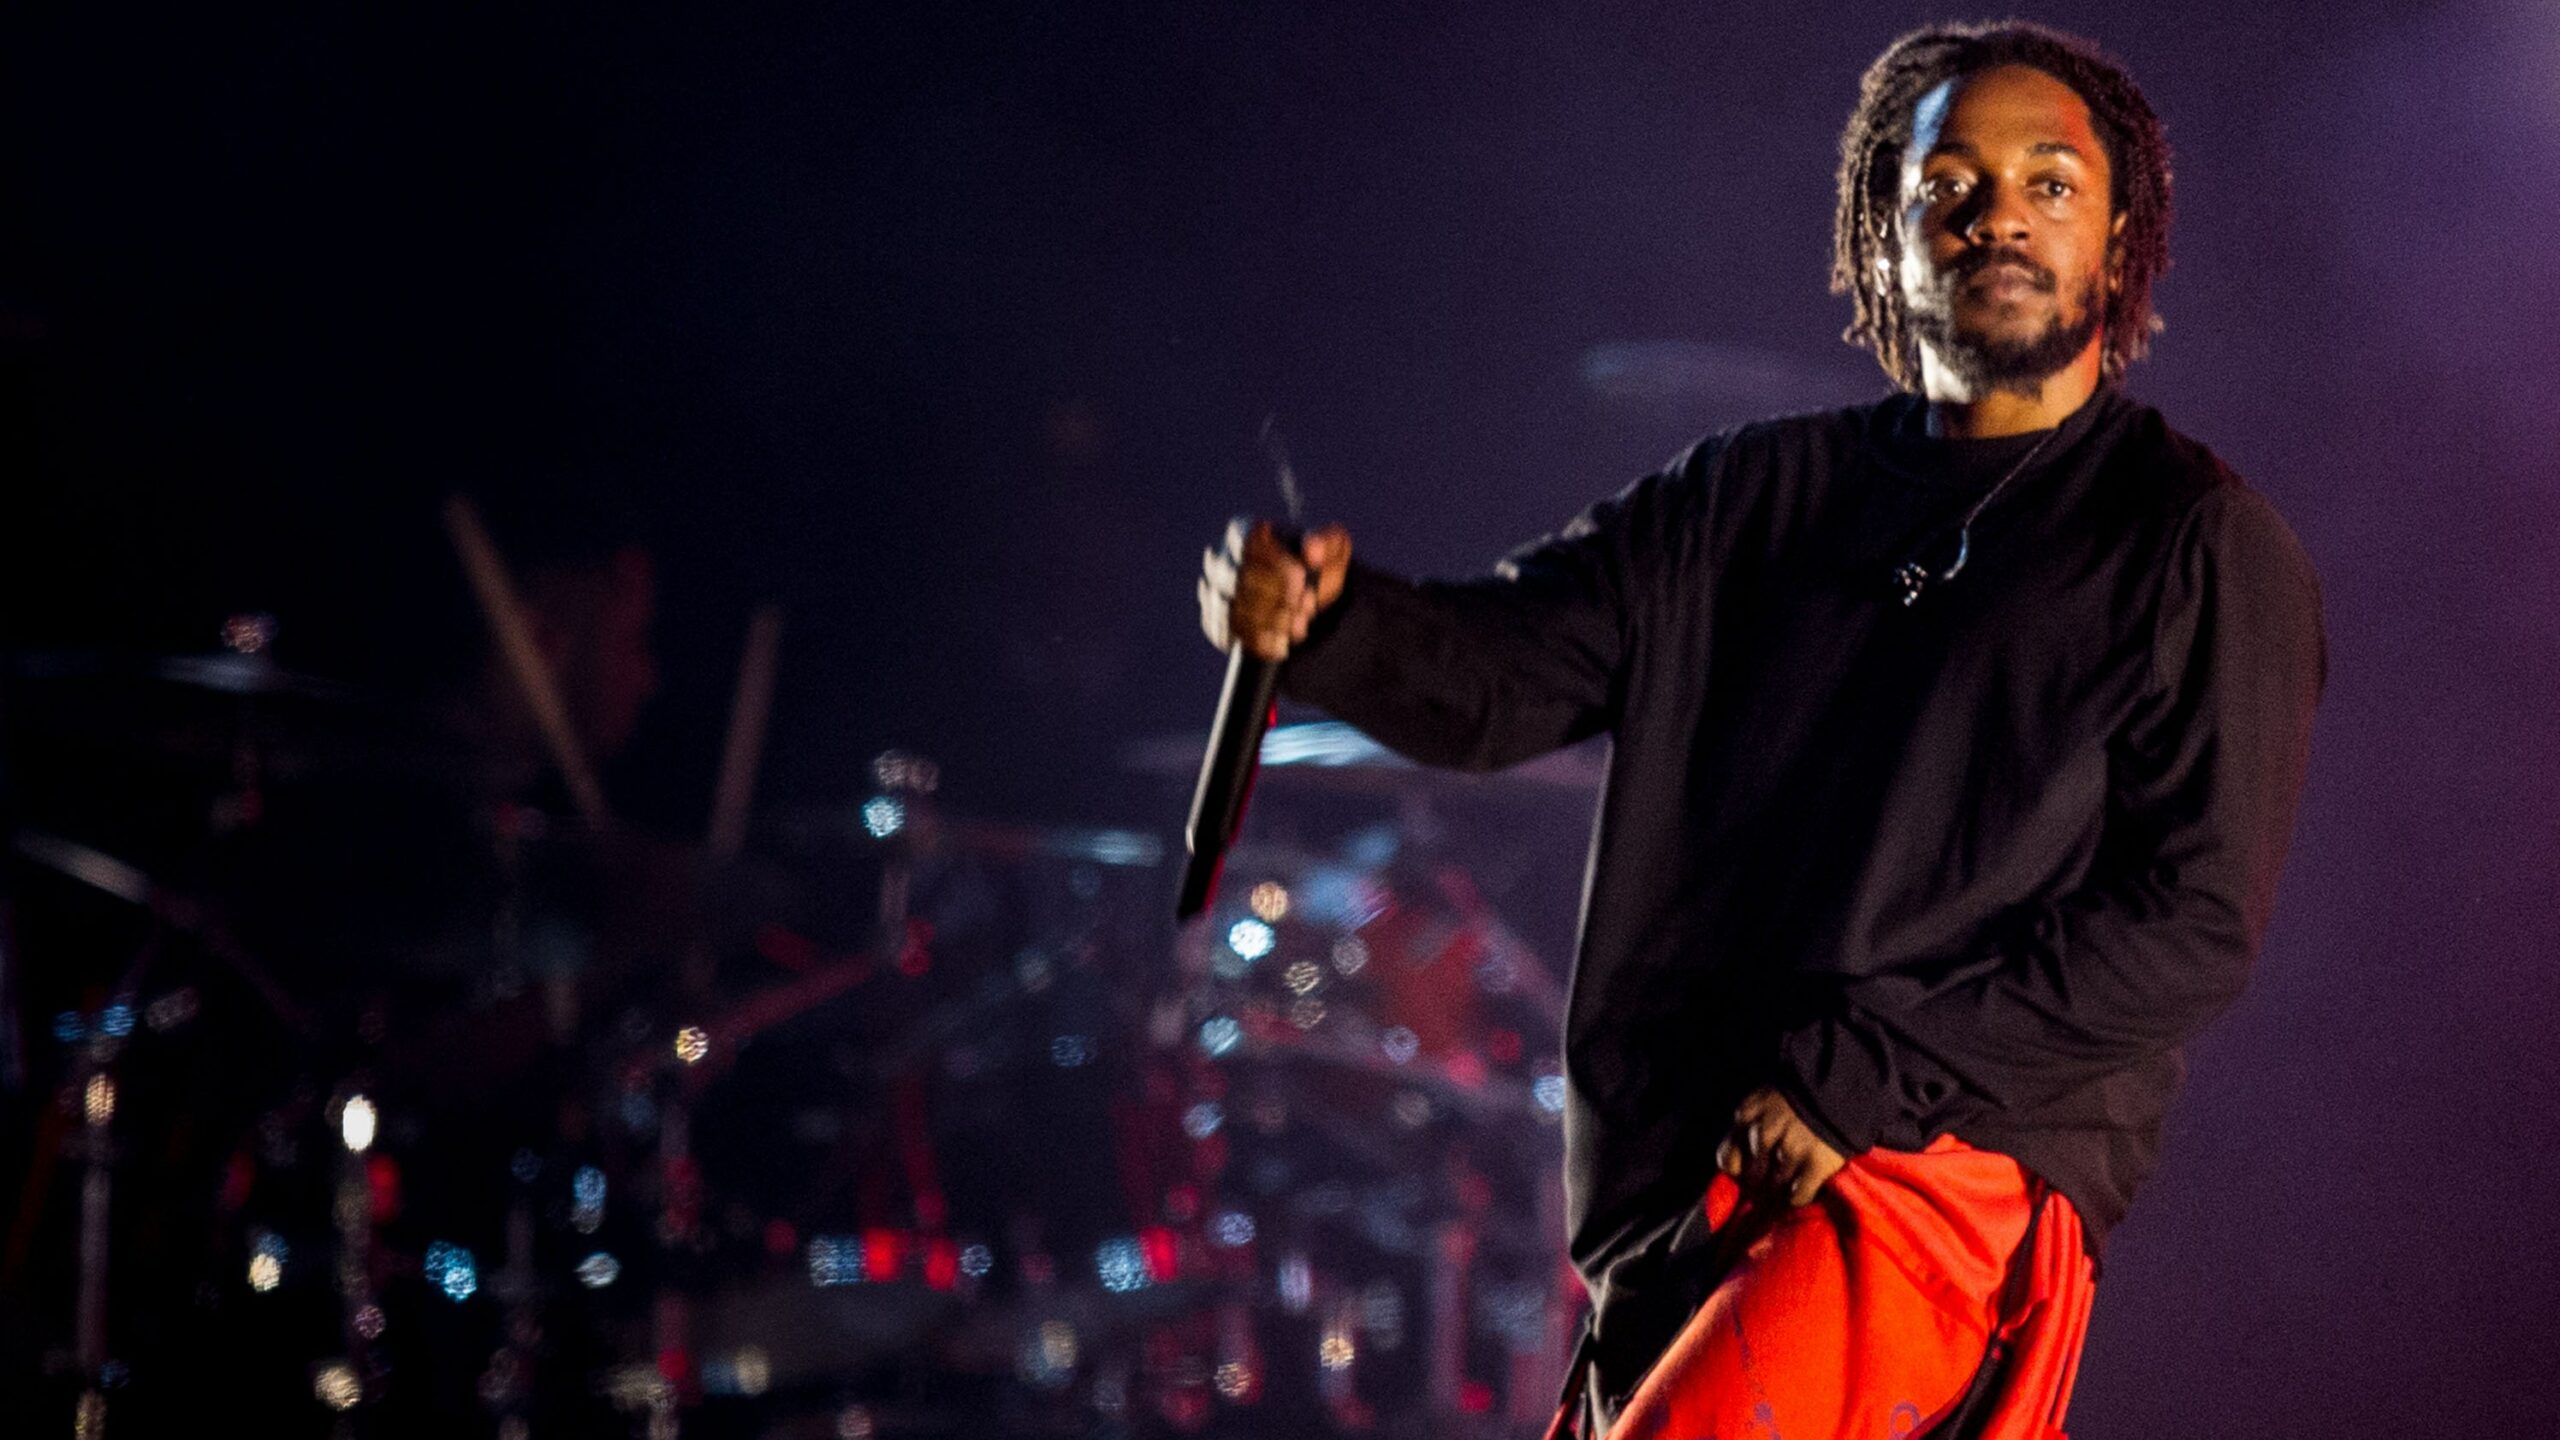 Kendrick performing on stage